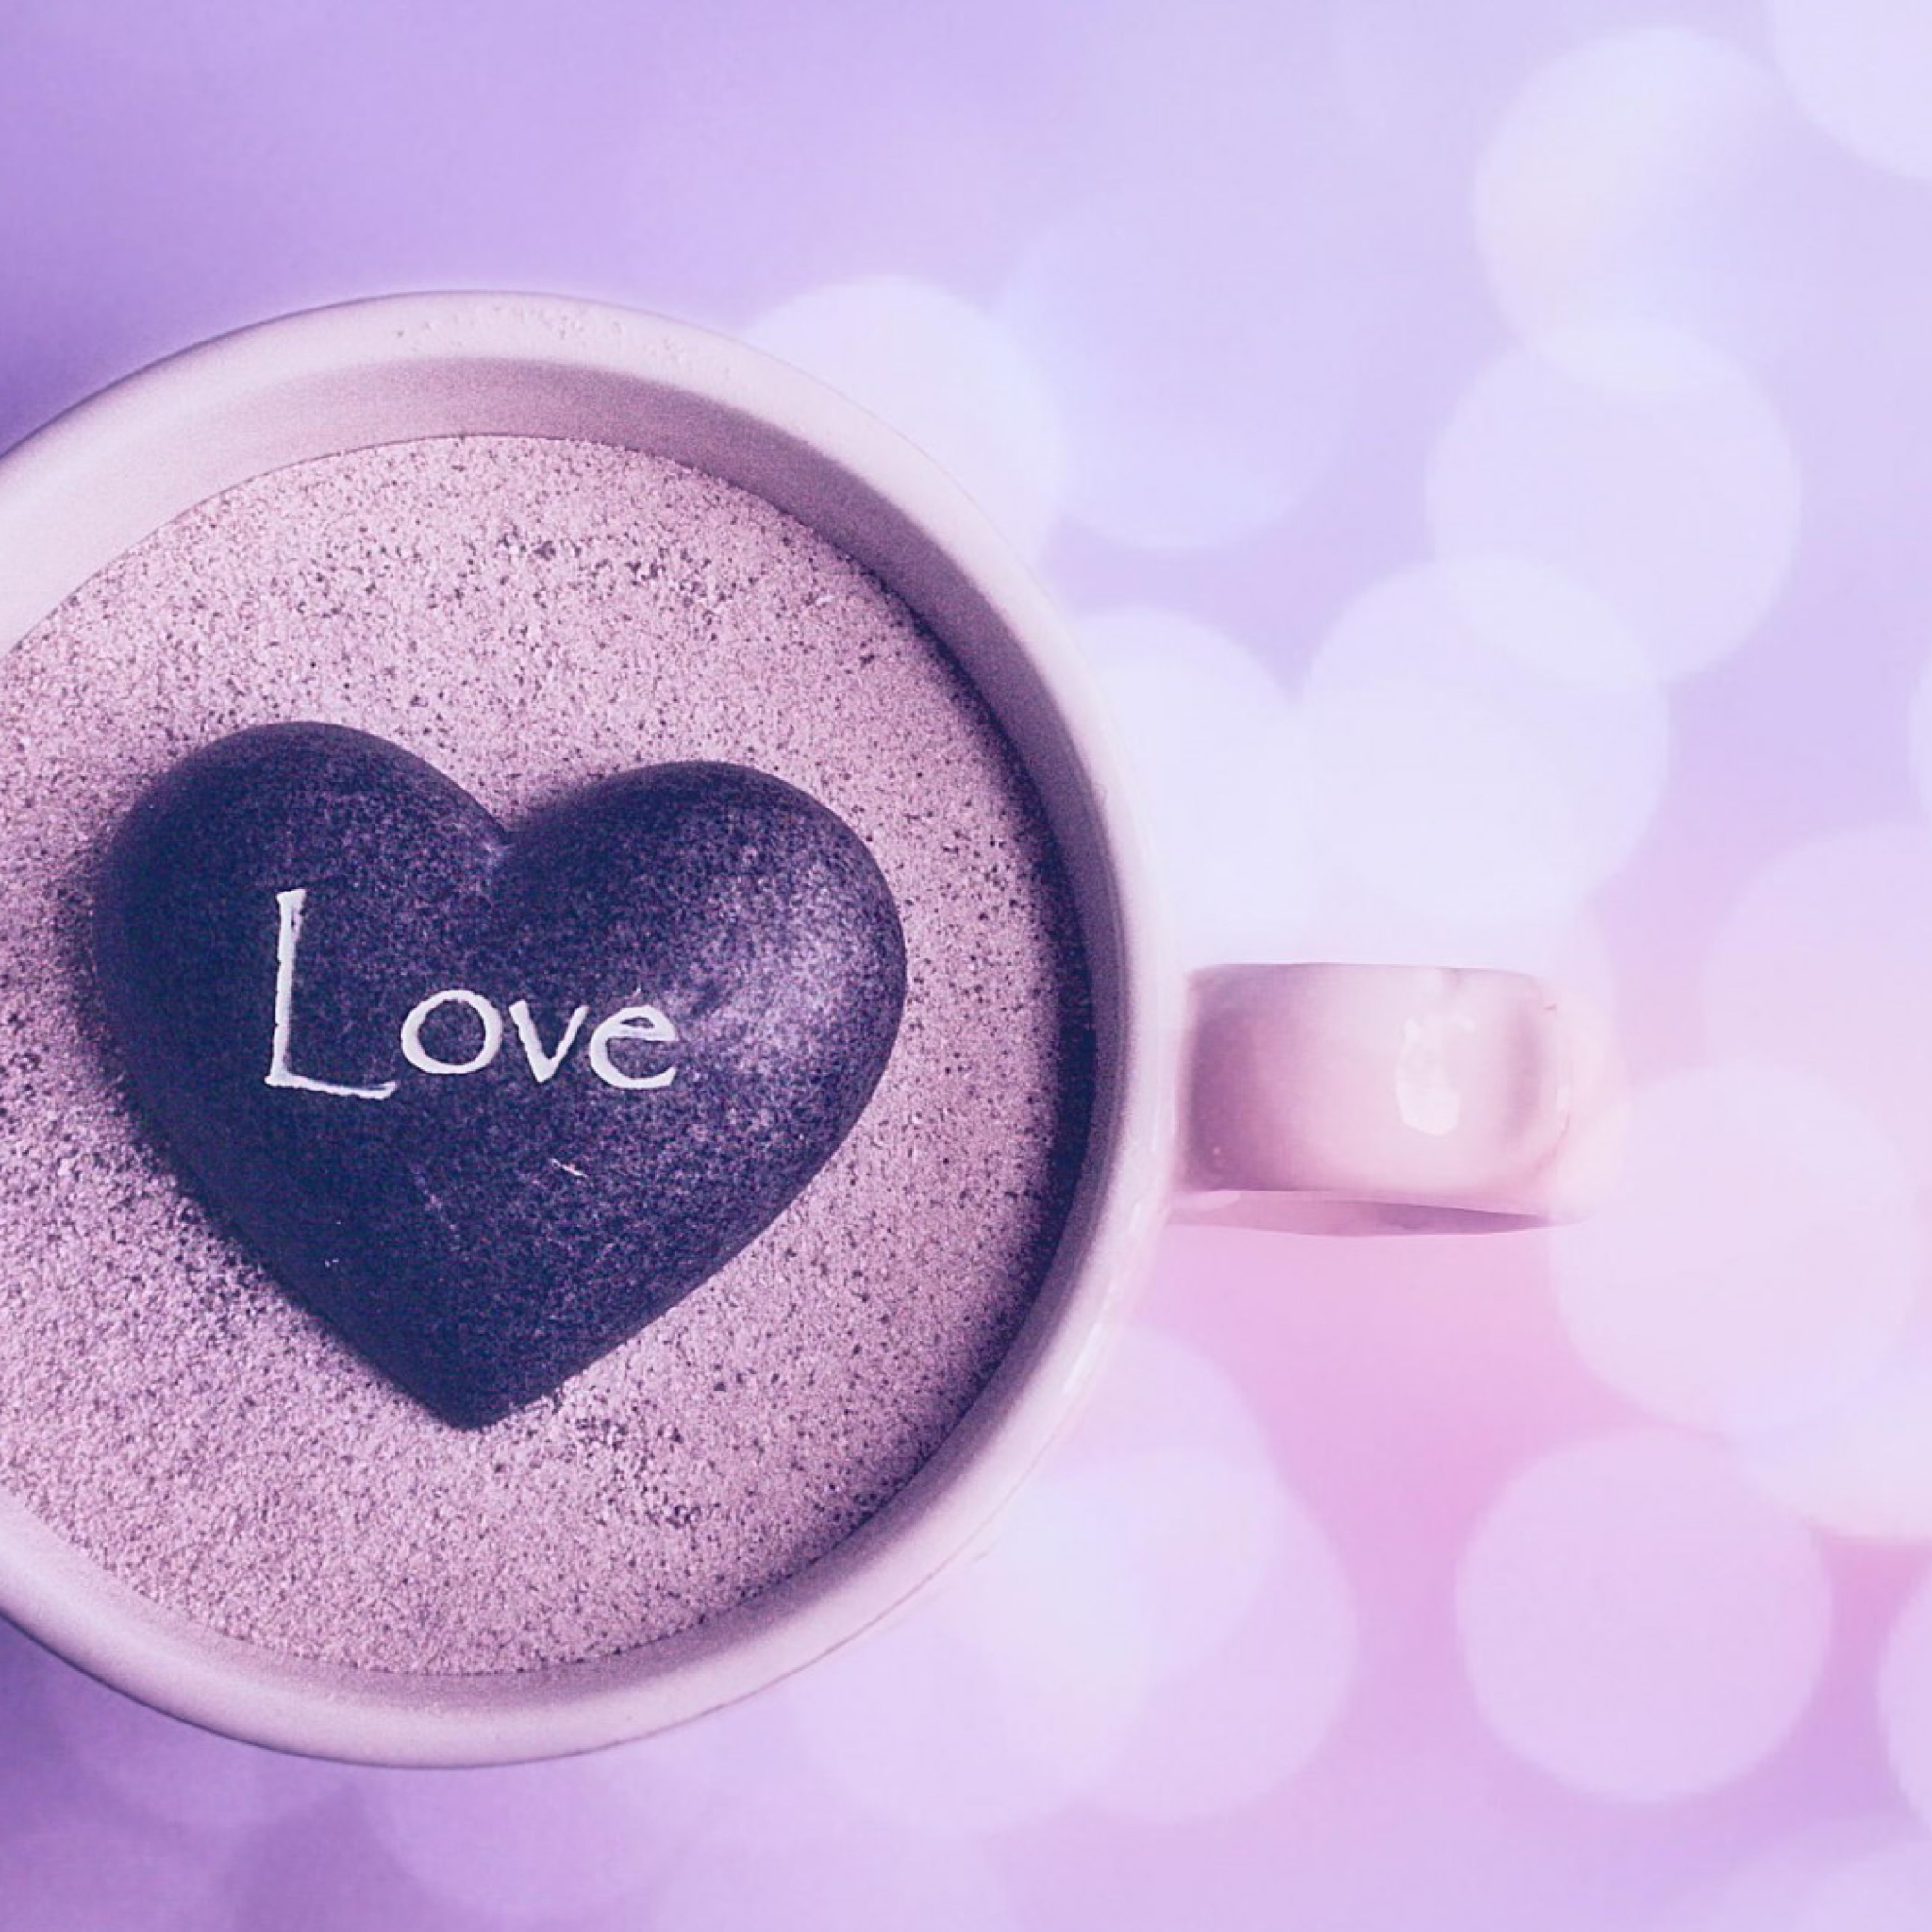 Love In Cup wallpaper 2048x2048